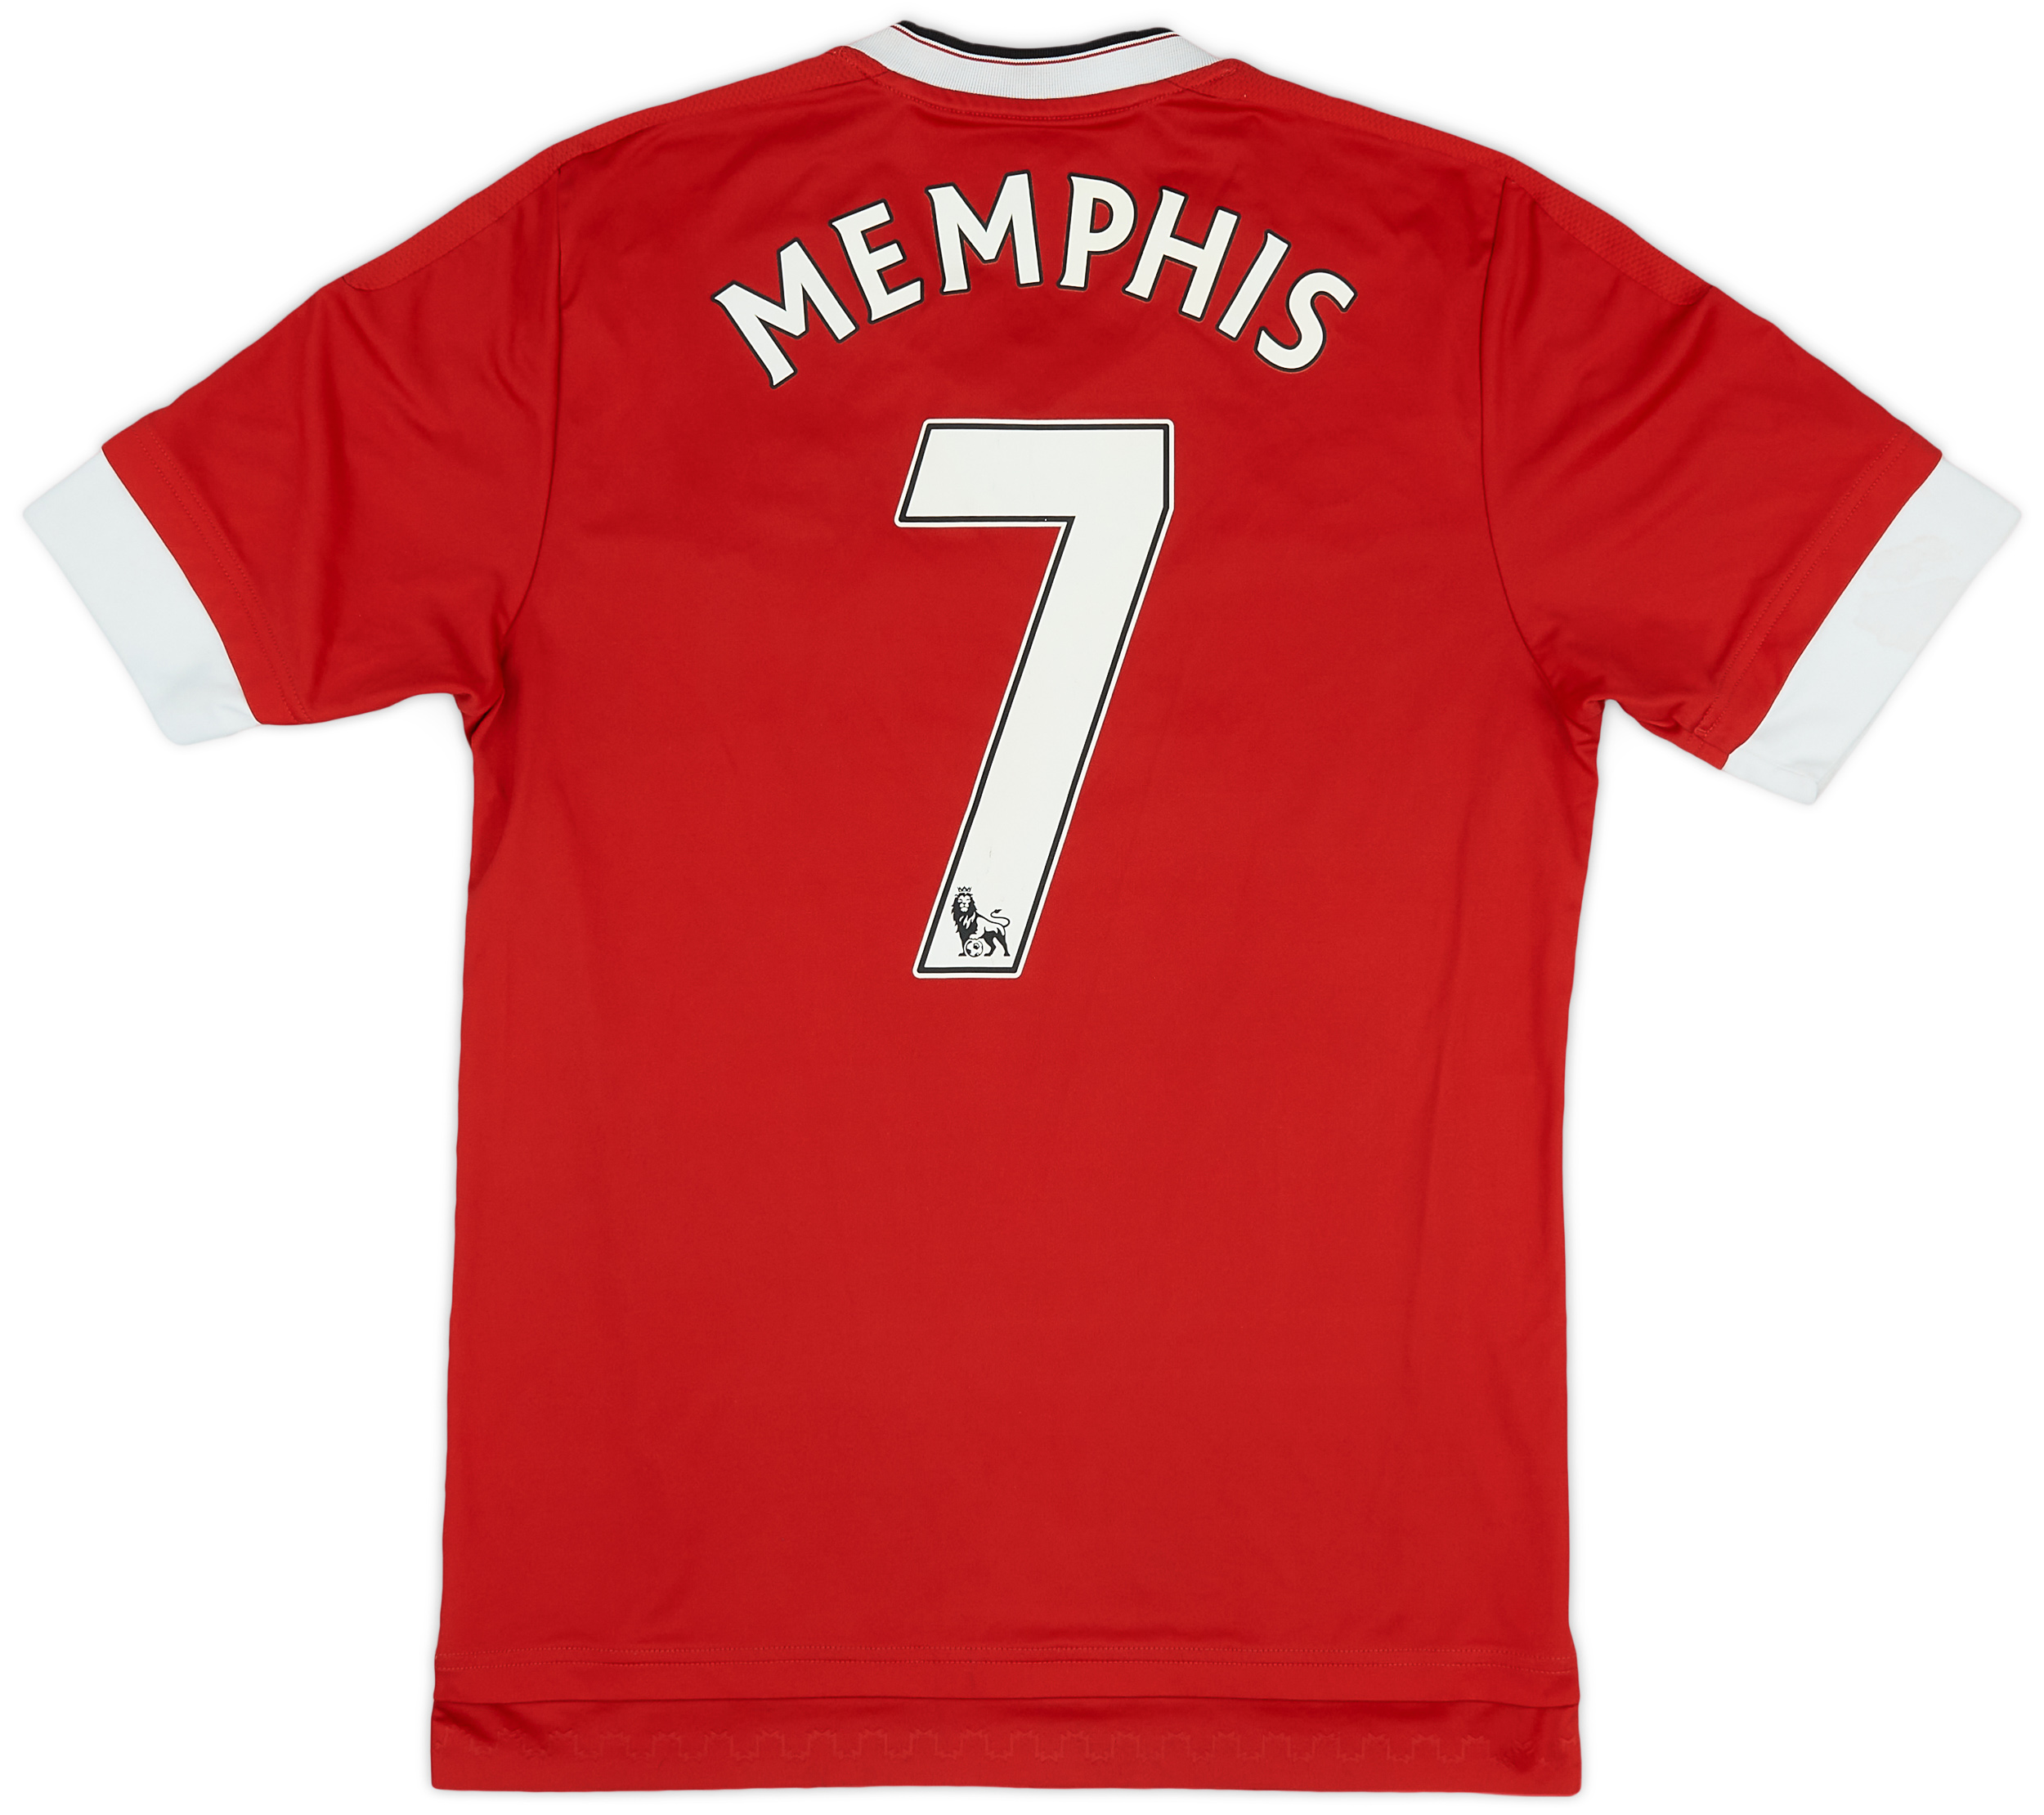 2015-16 Manchester United Home Shirt Memphis #7 - 7/10 - (S)